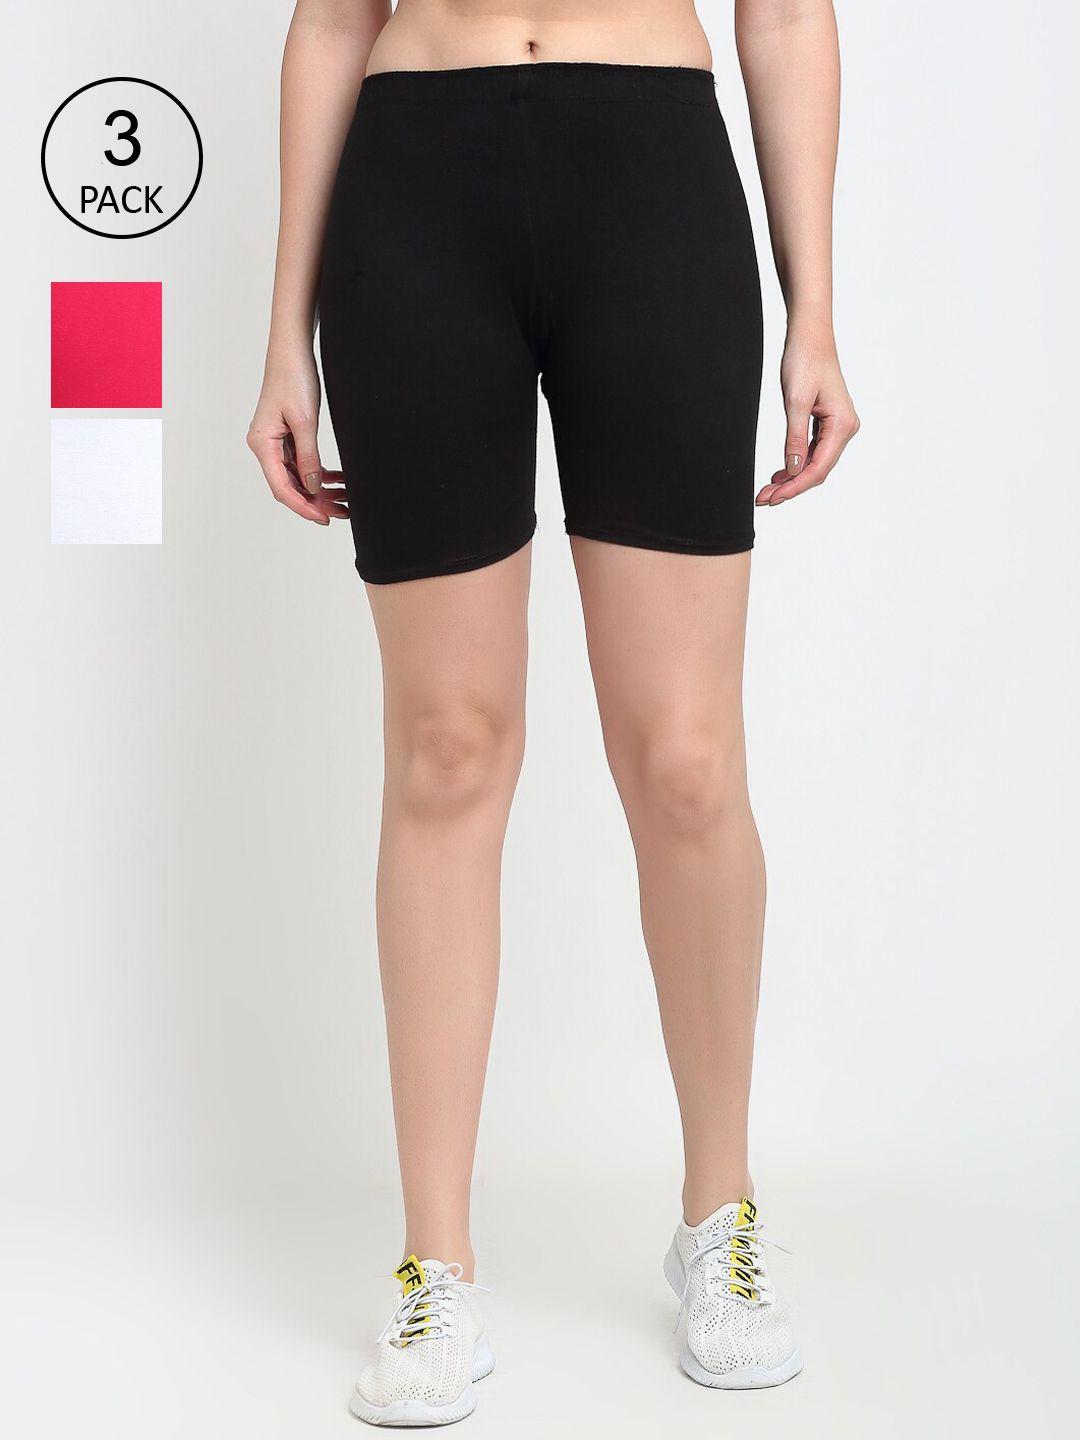 gracit women black red & white set of 3 biker shorts